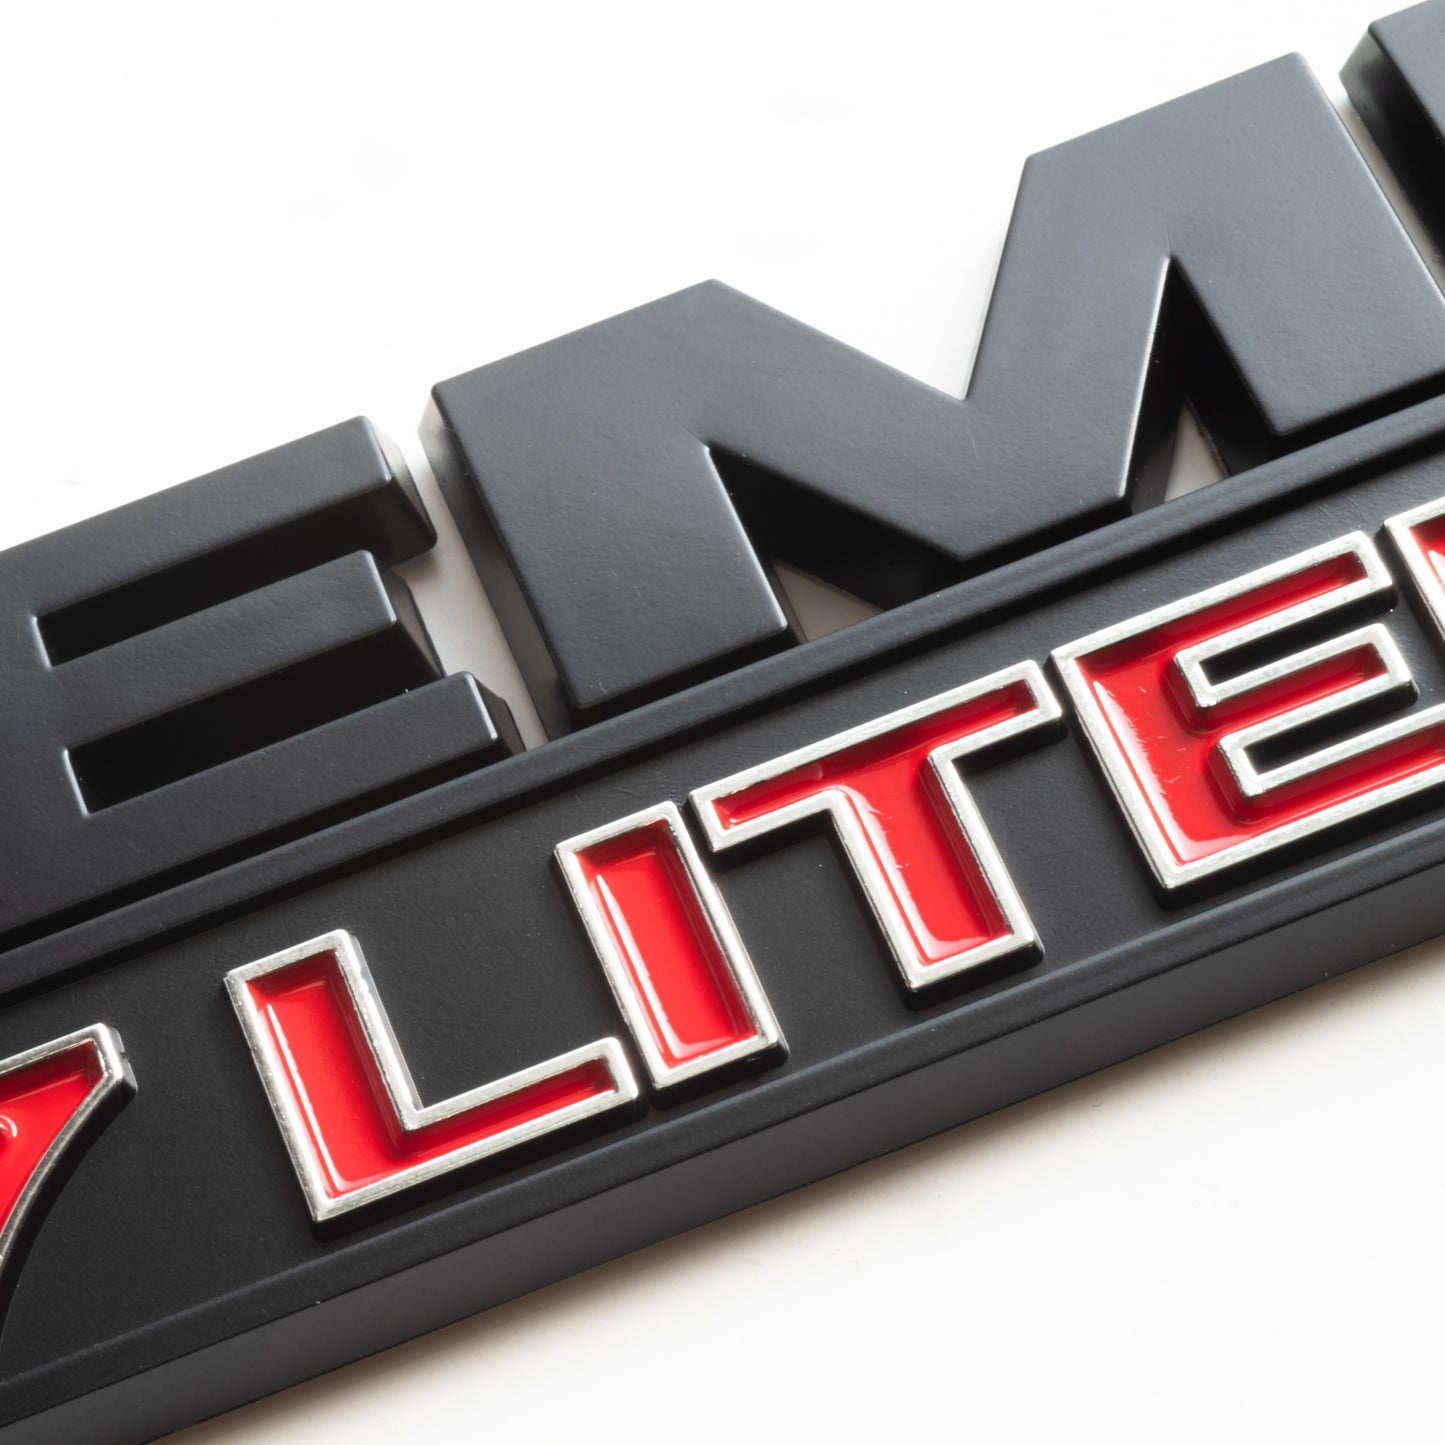 2pcs Hemi 5.7 Liter Emblems 3D Side Door Fender 2009-2019 RAM 1500 2500 3500